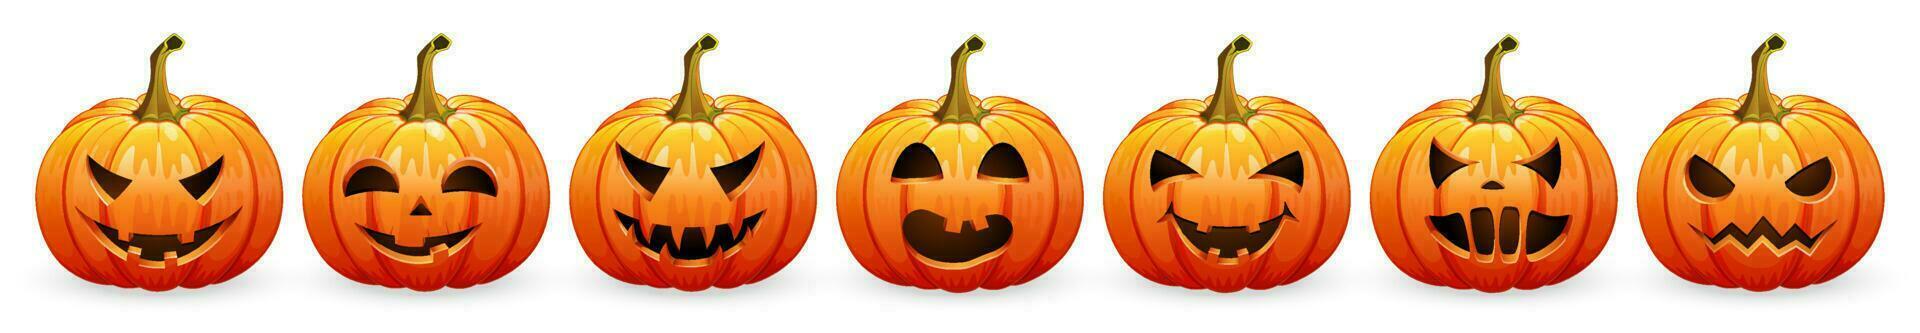 Pumpkin set for Halloween on a white background vector illustration